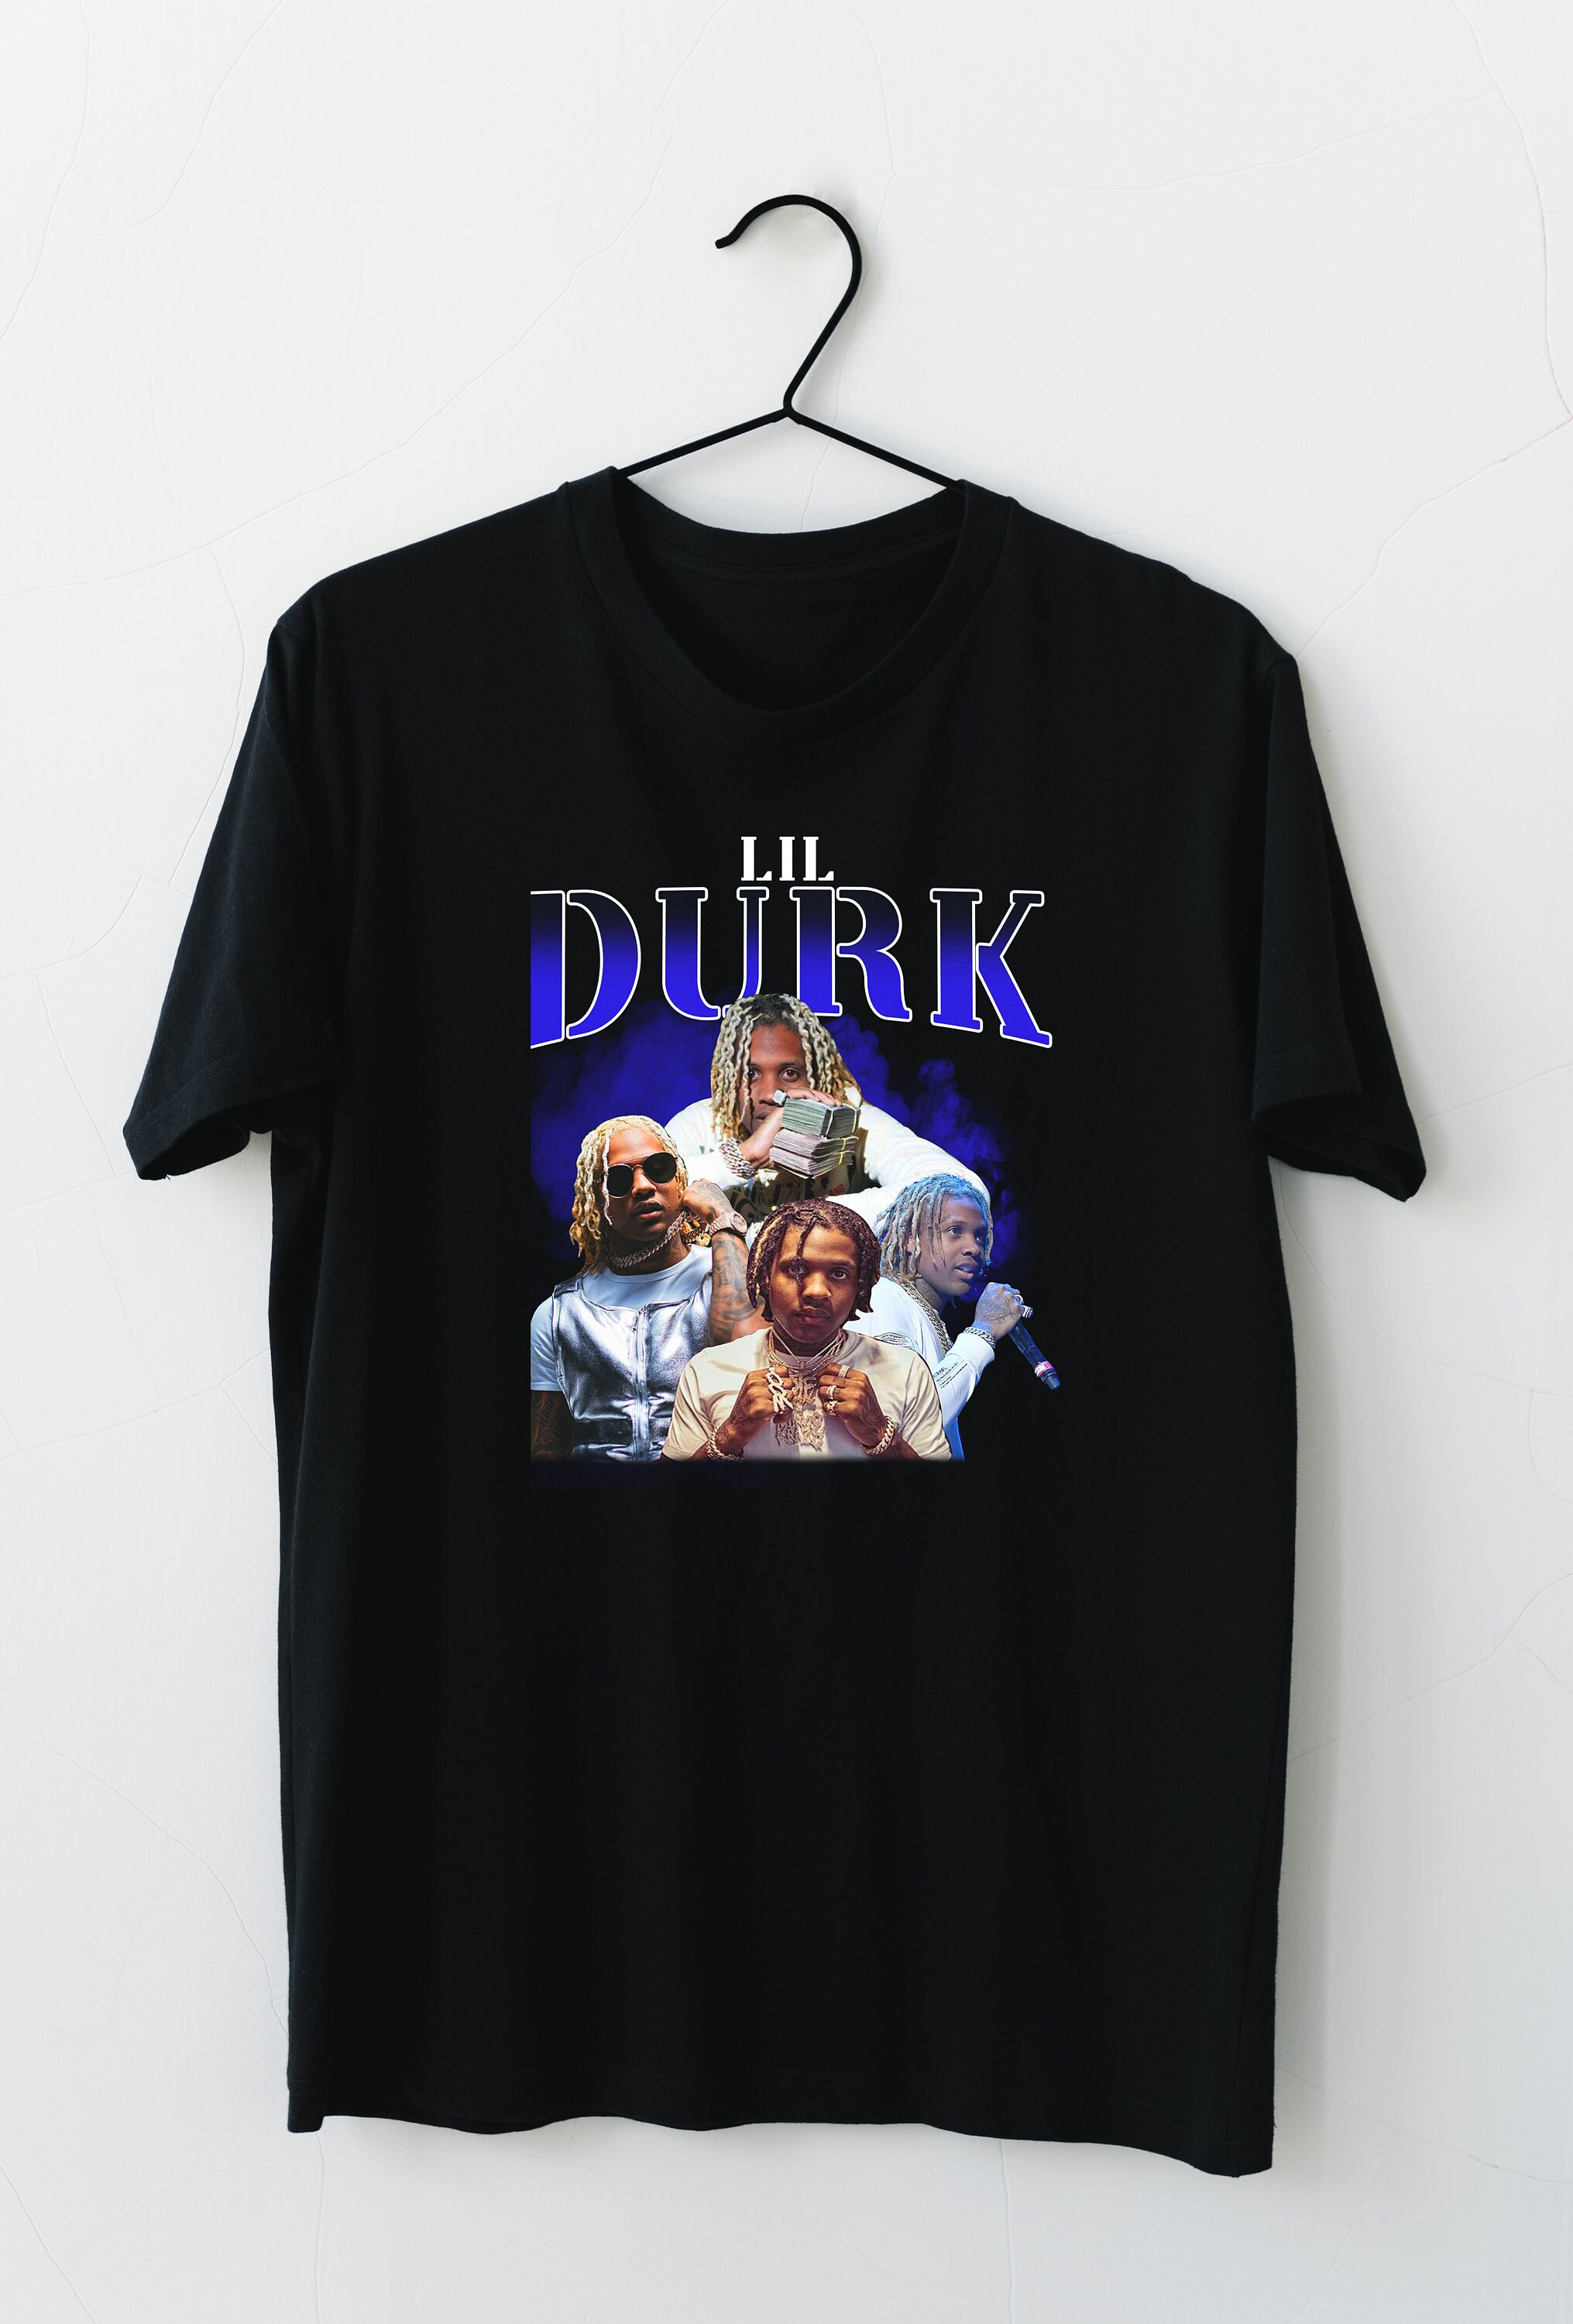 Lil Durk T-Shirt Lil Durk Graphic Tee Music T-Shirt vintage | Etsy